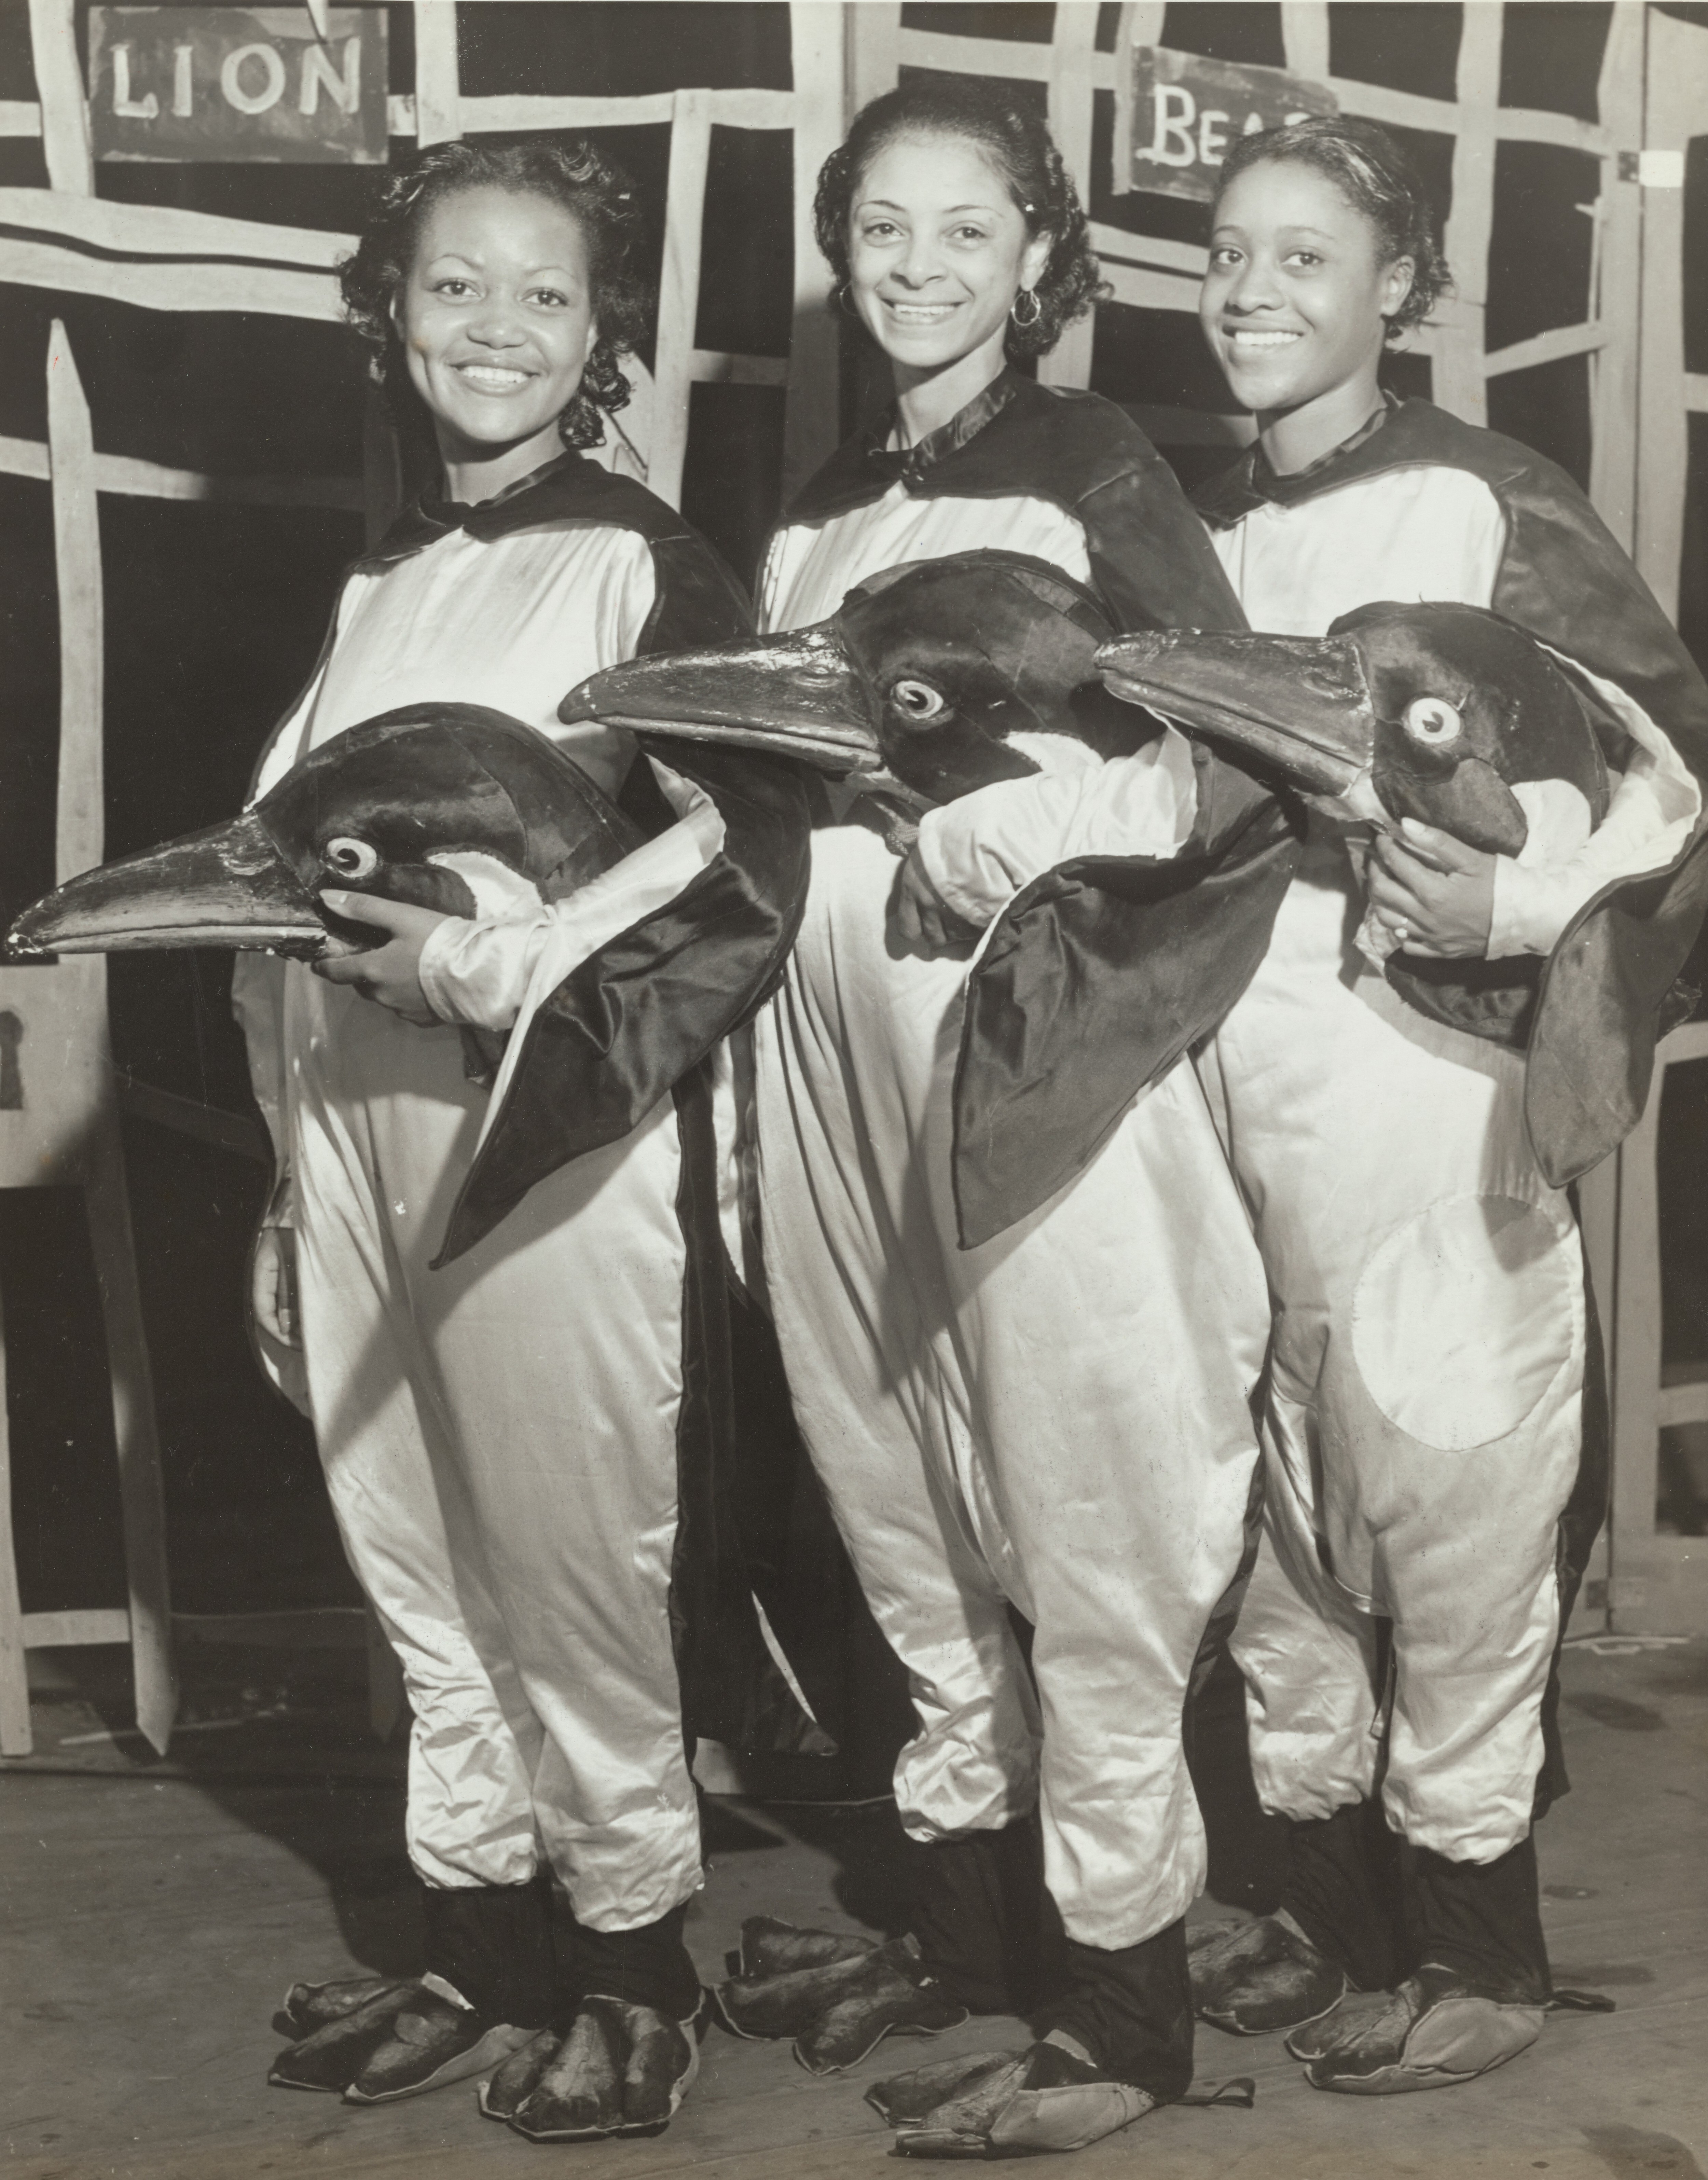 Дороти Джонс, Либби Робинсон и Рут Мур в костюмах пингвинов, 1937